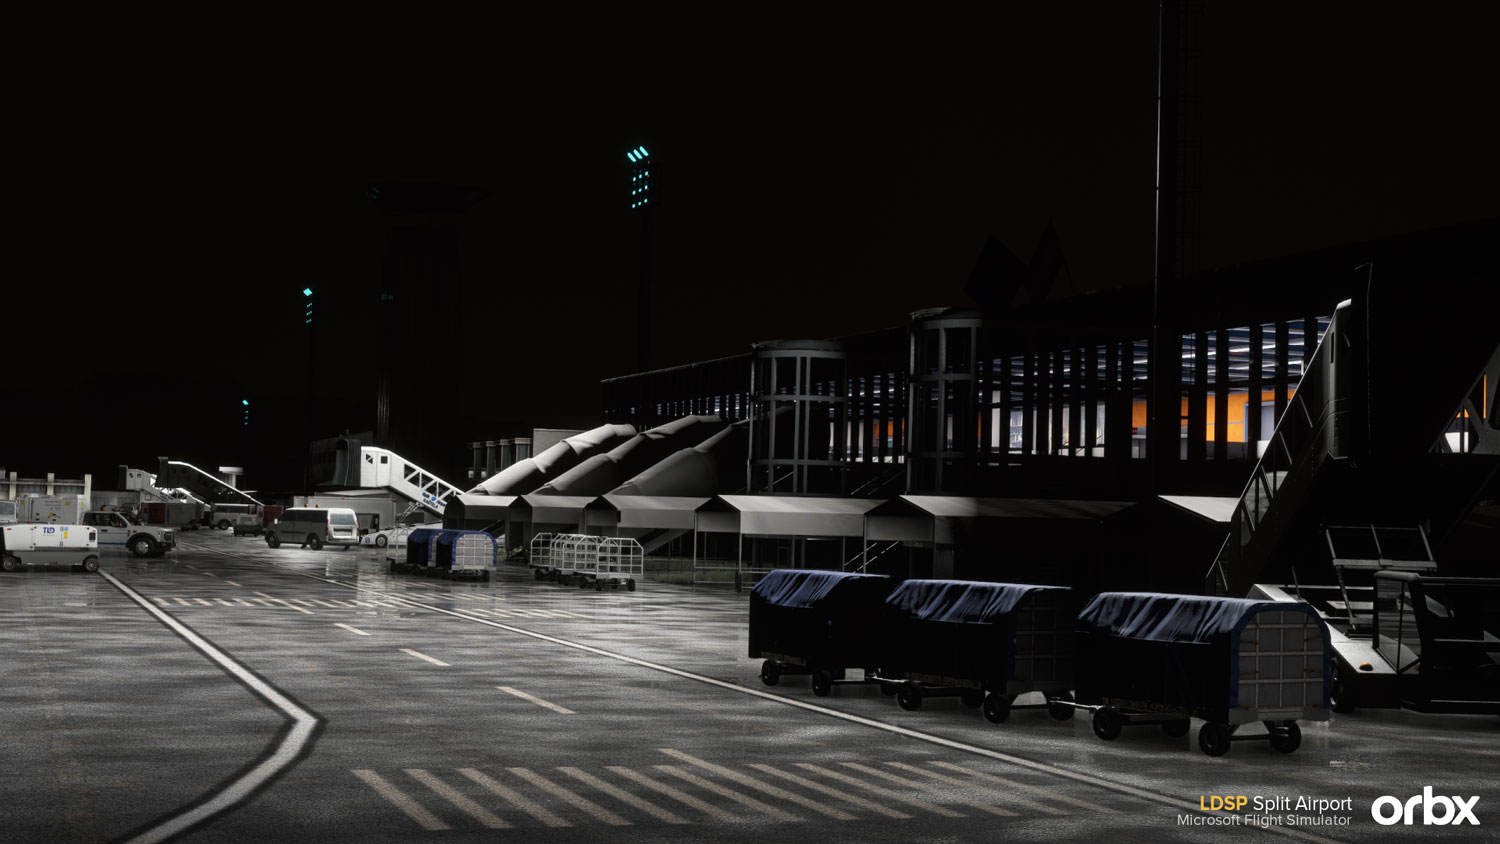 Orbx - LDSP Split Airport MSFS